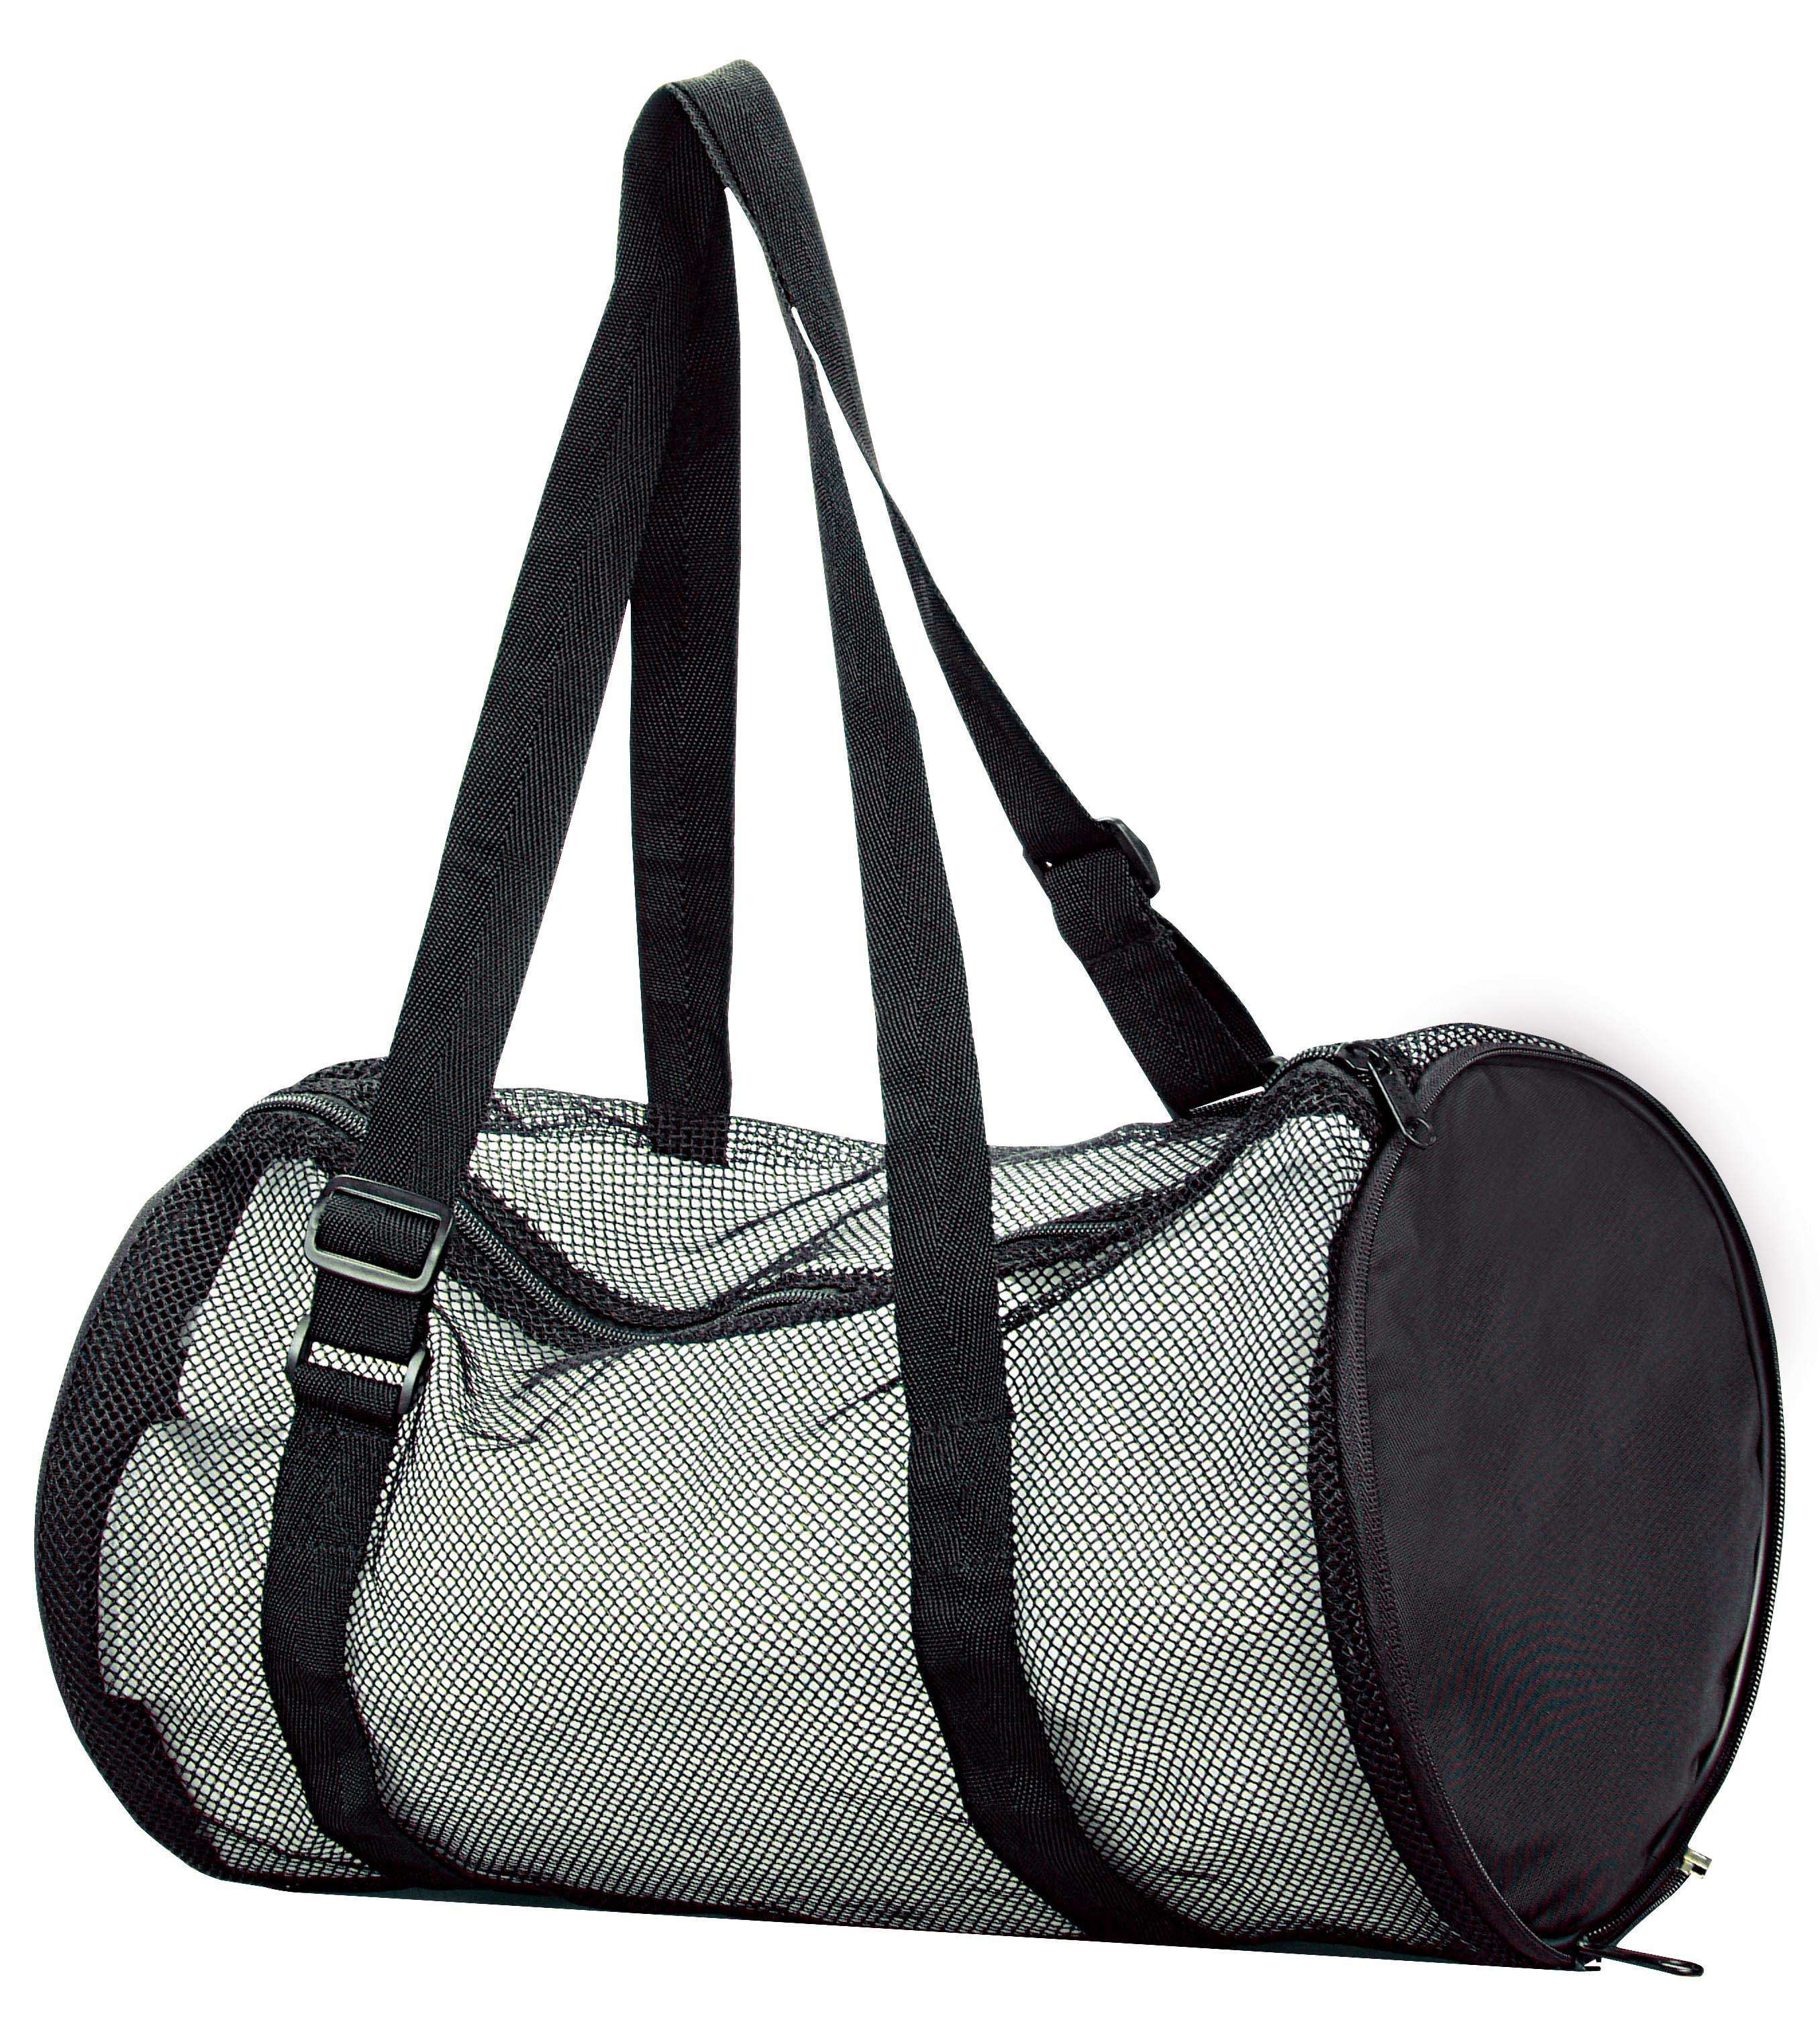 B5012 - The Foldable Barrel Bag